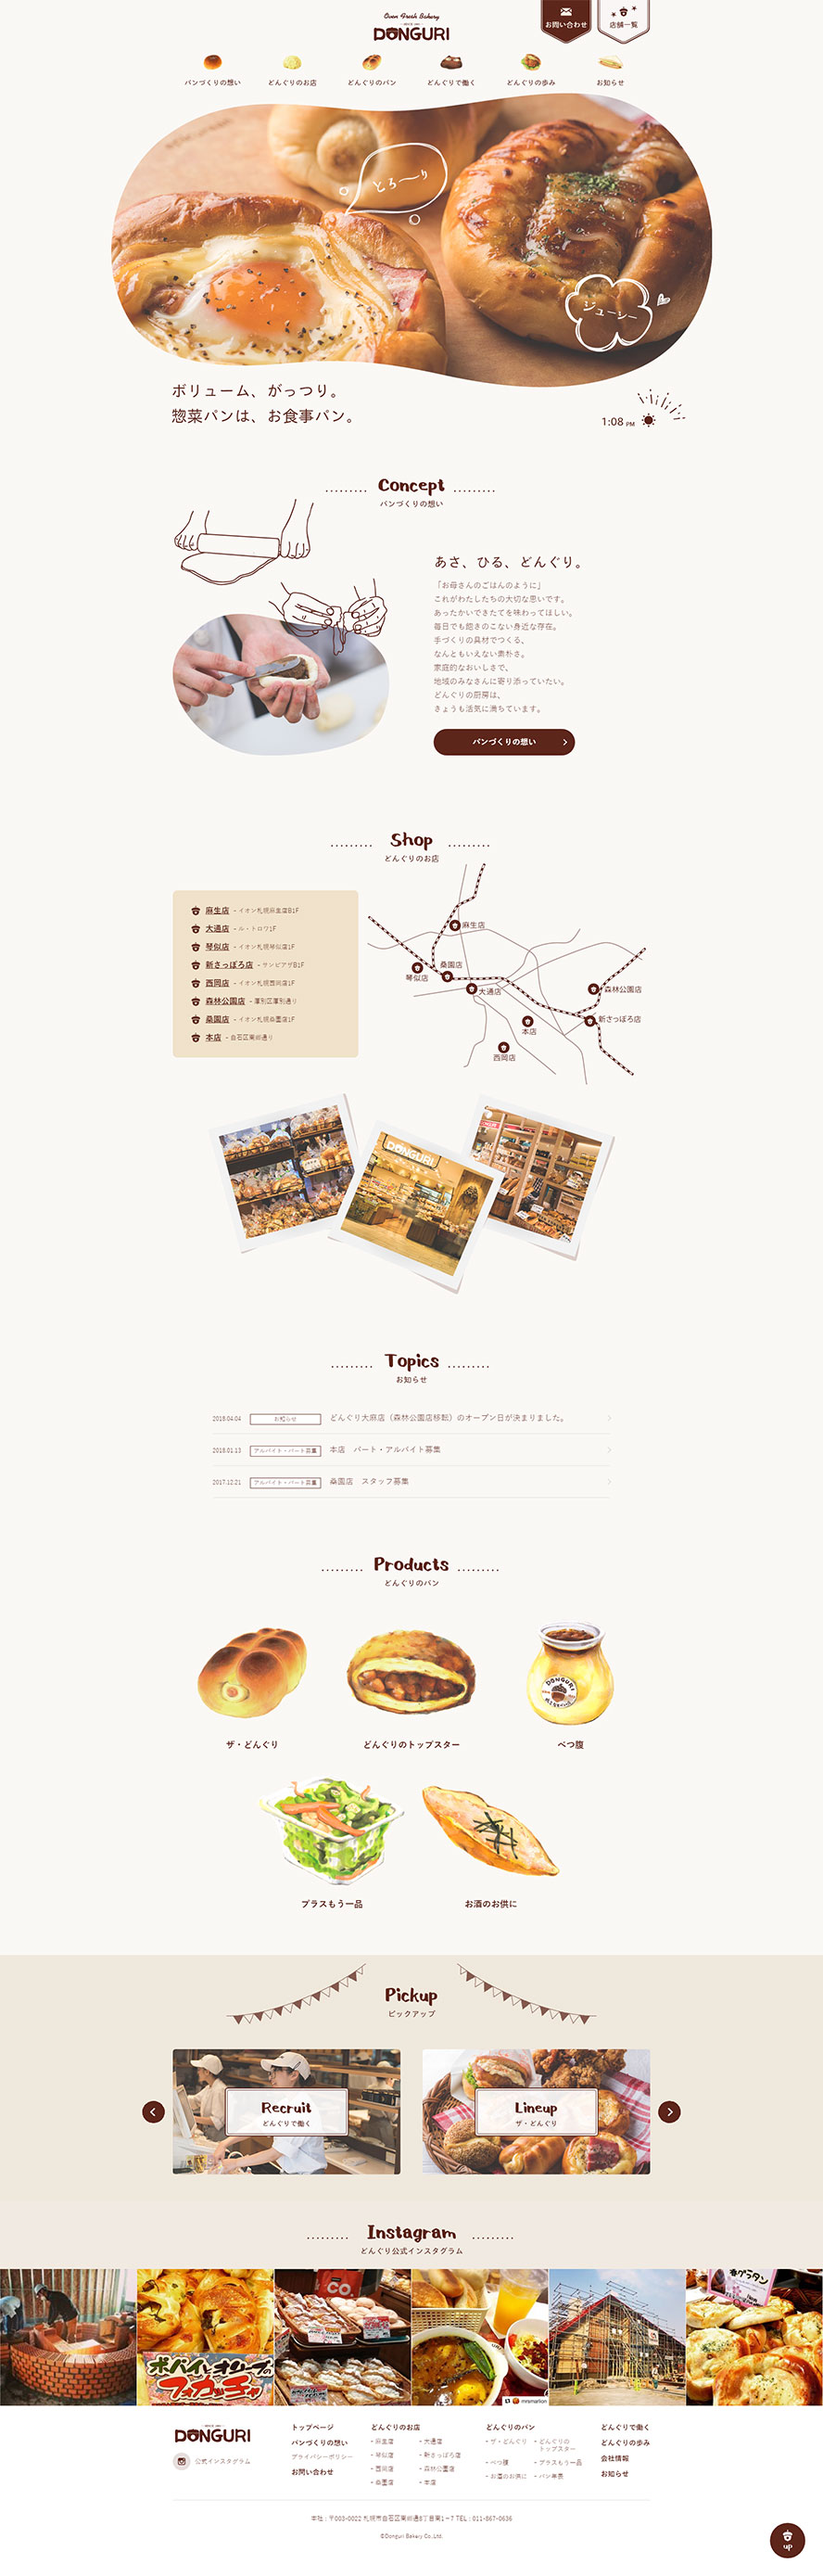 DONGURI面包网站设计